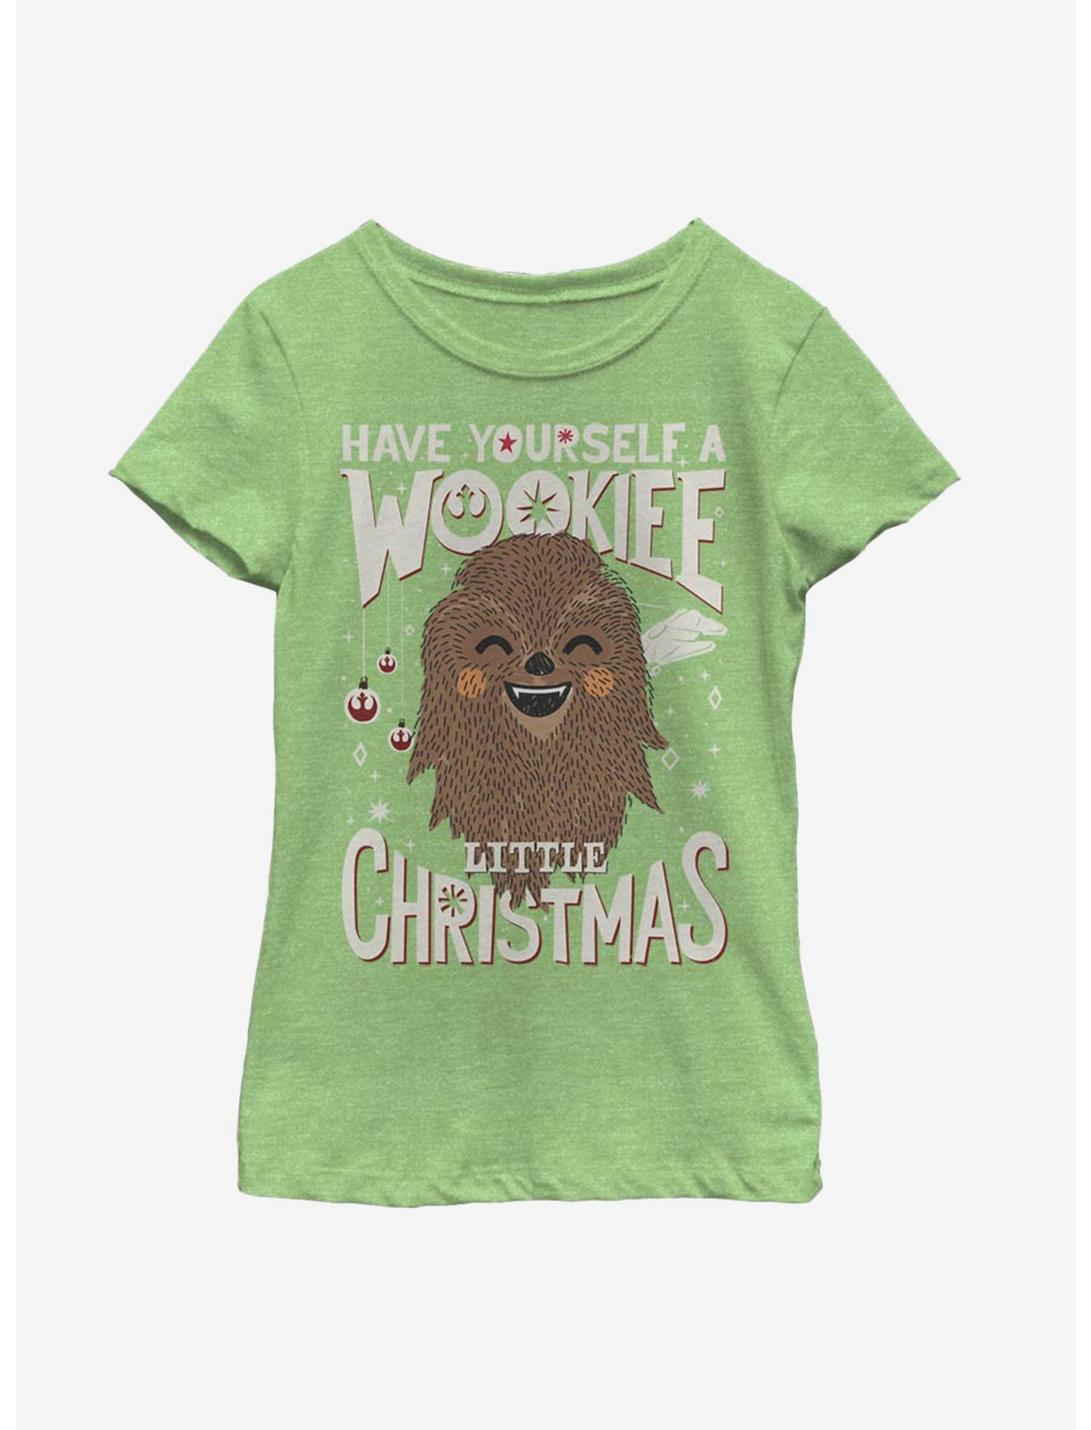 Star Wars Wookiee Christmas Youth Girls T-Shirt, , hi-res